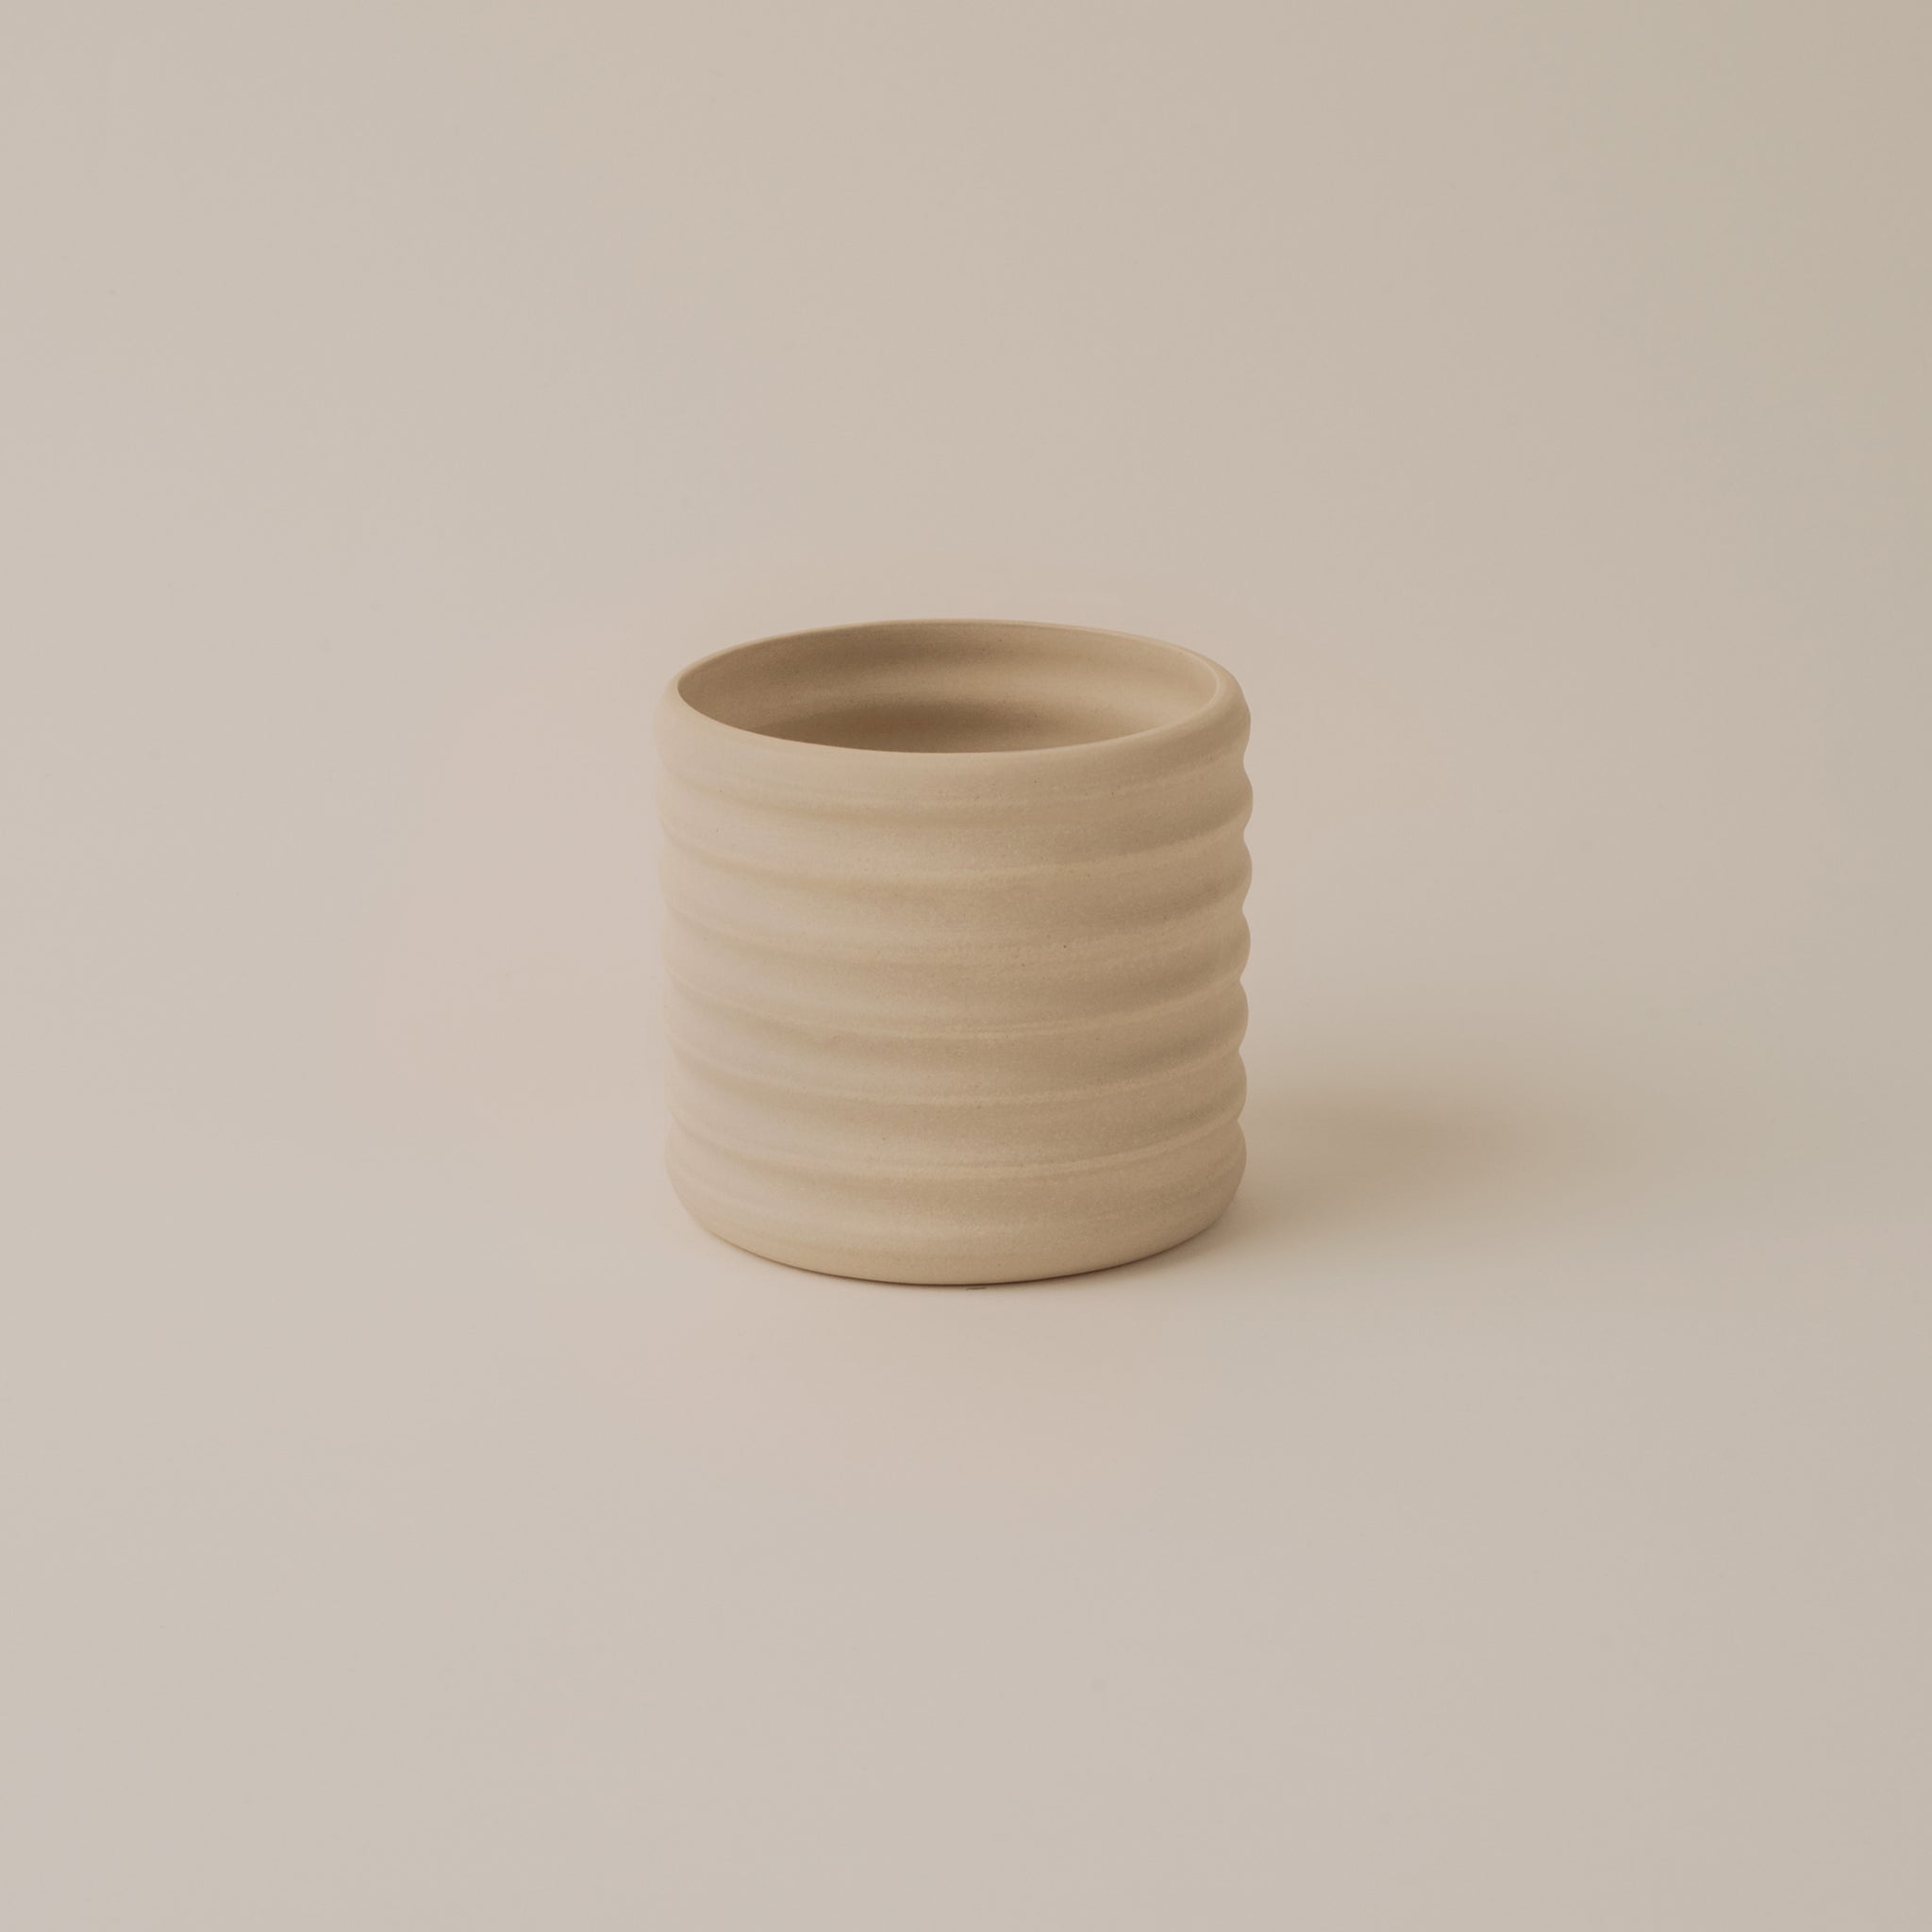 handmade coffee cup pottery studio Berlin Prenzlauer Berg clai studio ceramic atelier